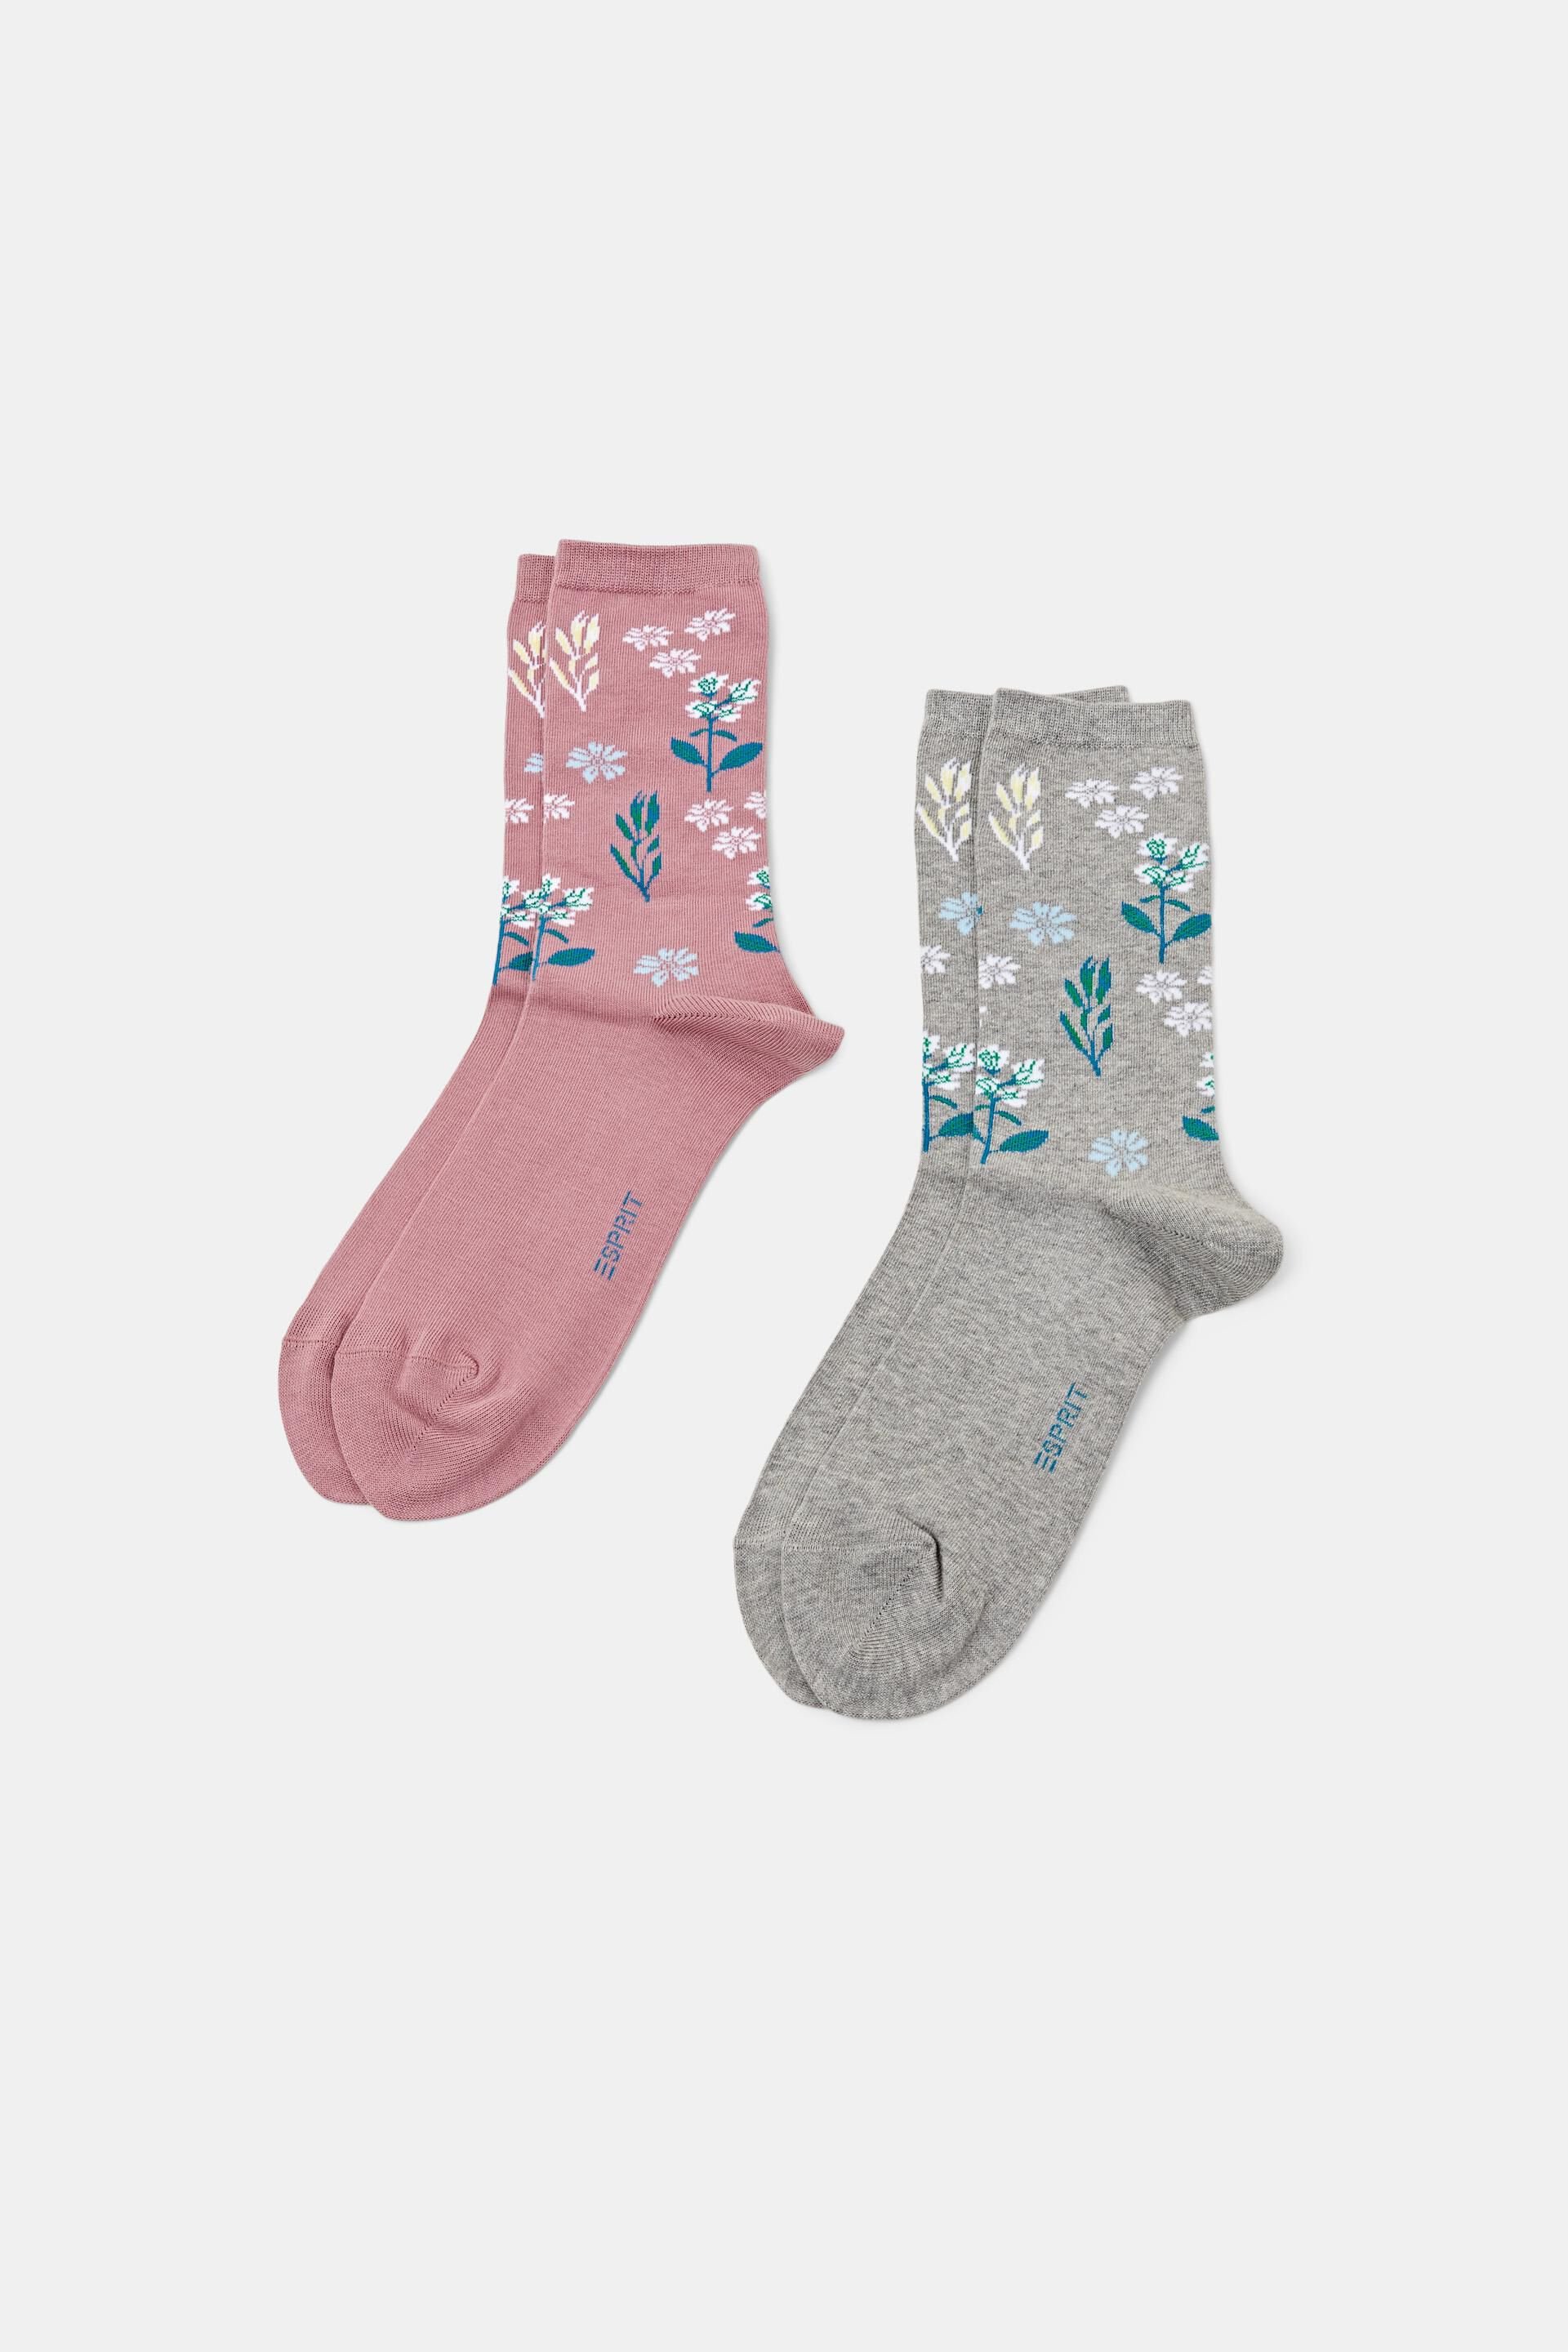 Esprit Online Store Socks